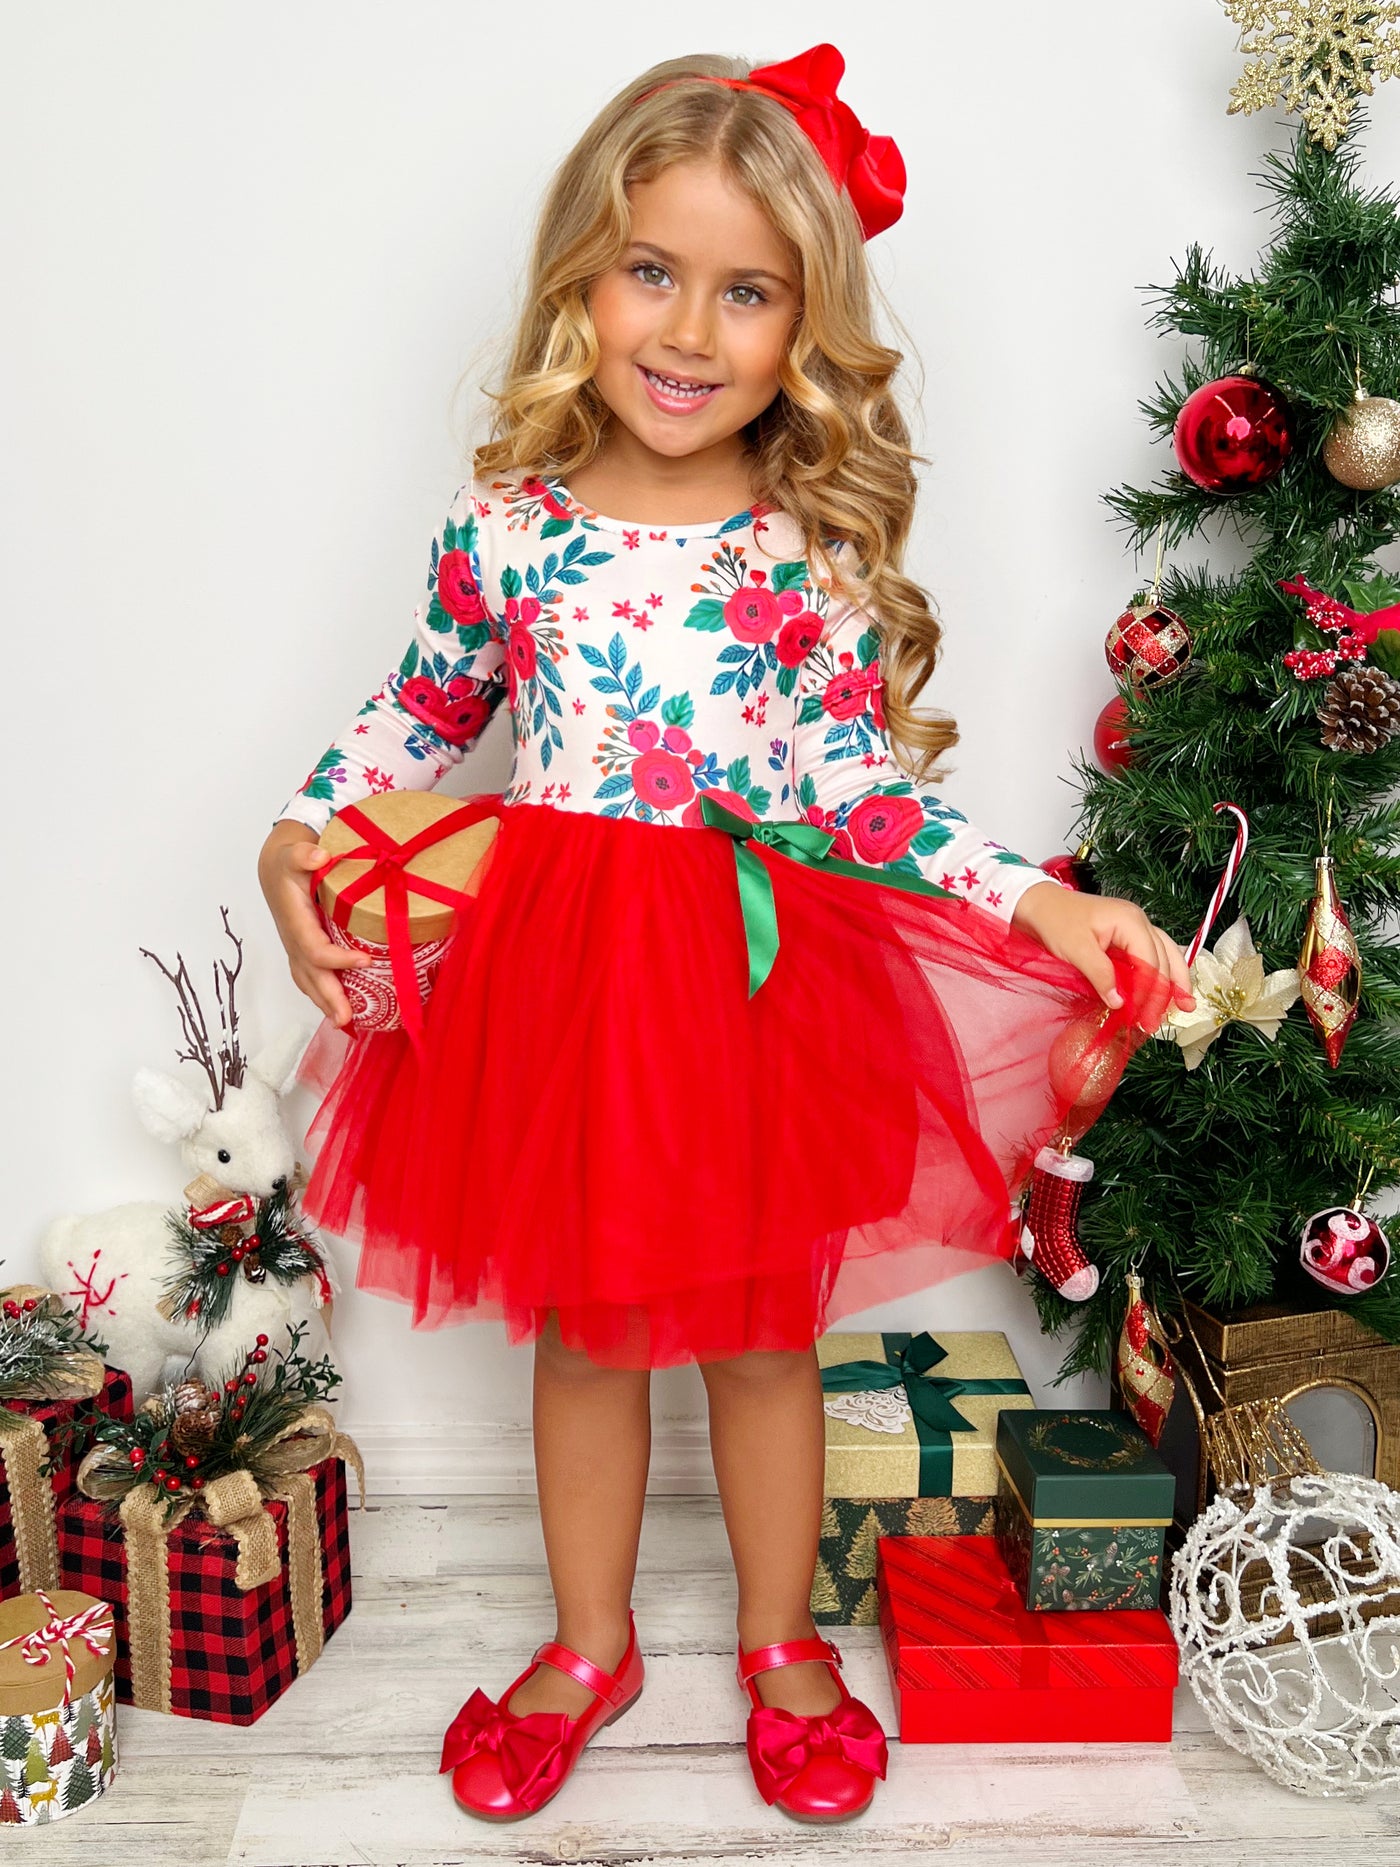 Cute Winter Dresses | Girls Winter Flower Tutu Dress | Holiday Dresses